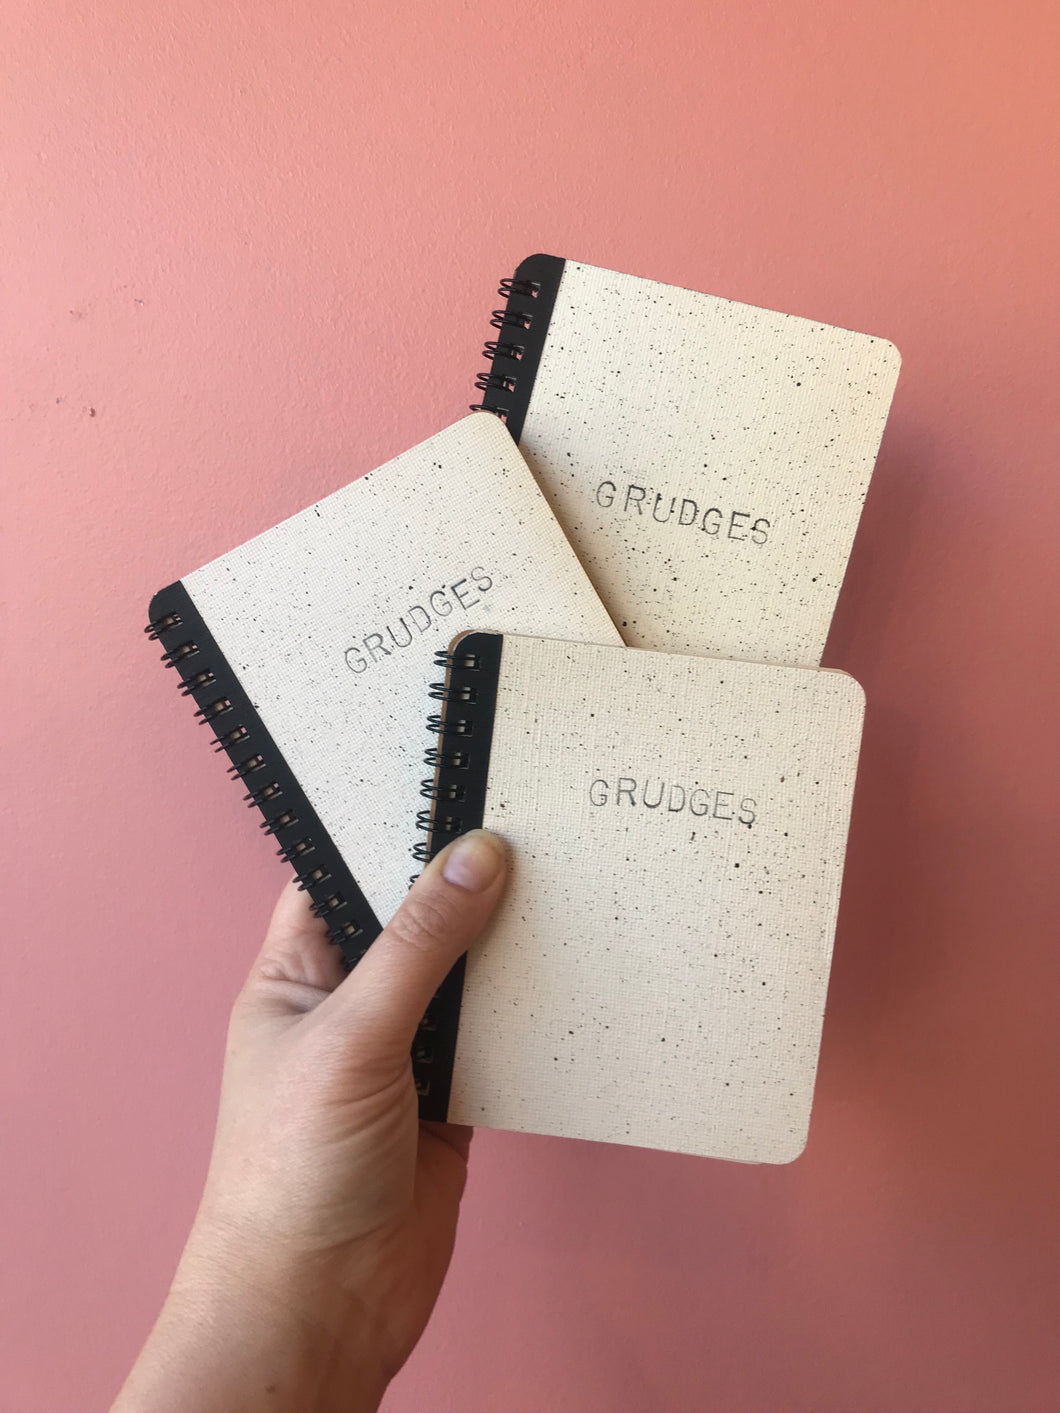 GRUDGES - handmade rescued notebook